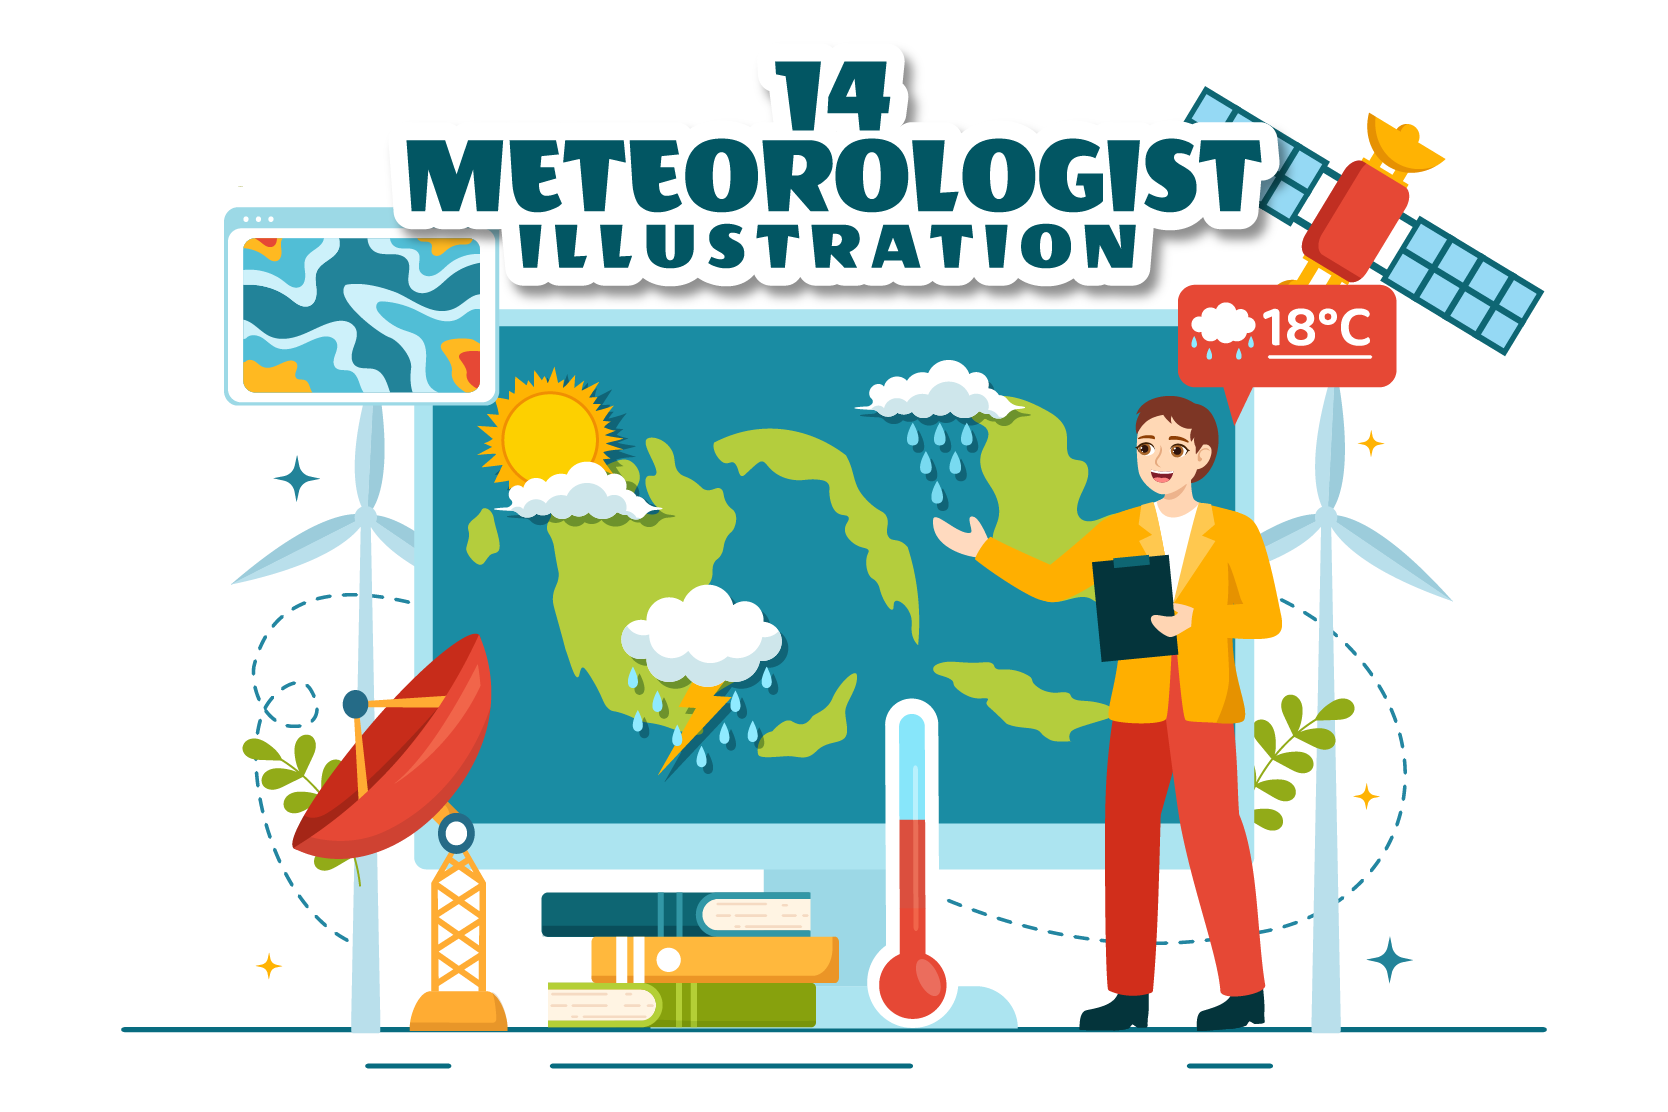 Premium Meteorologist Illustration pack from Nature Illustrations